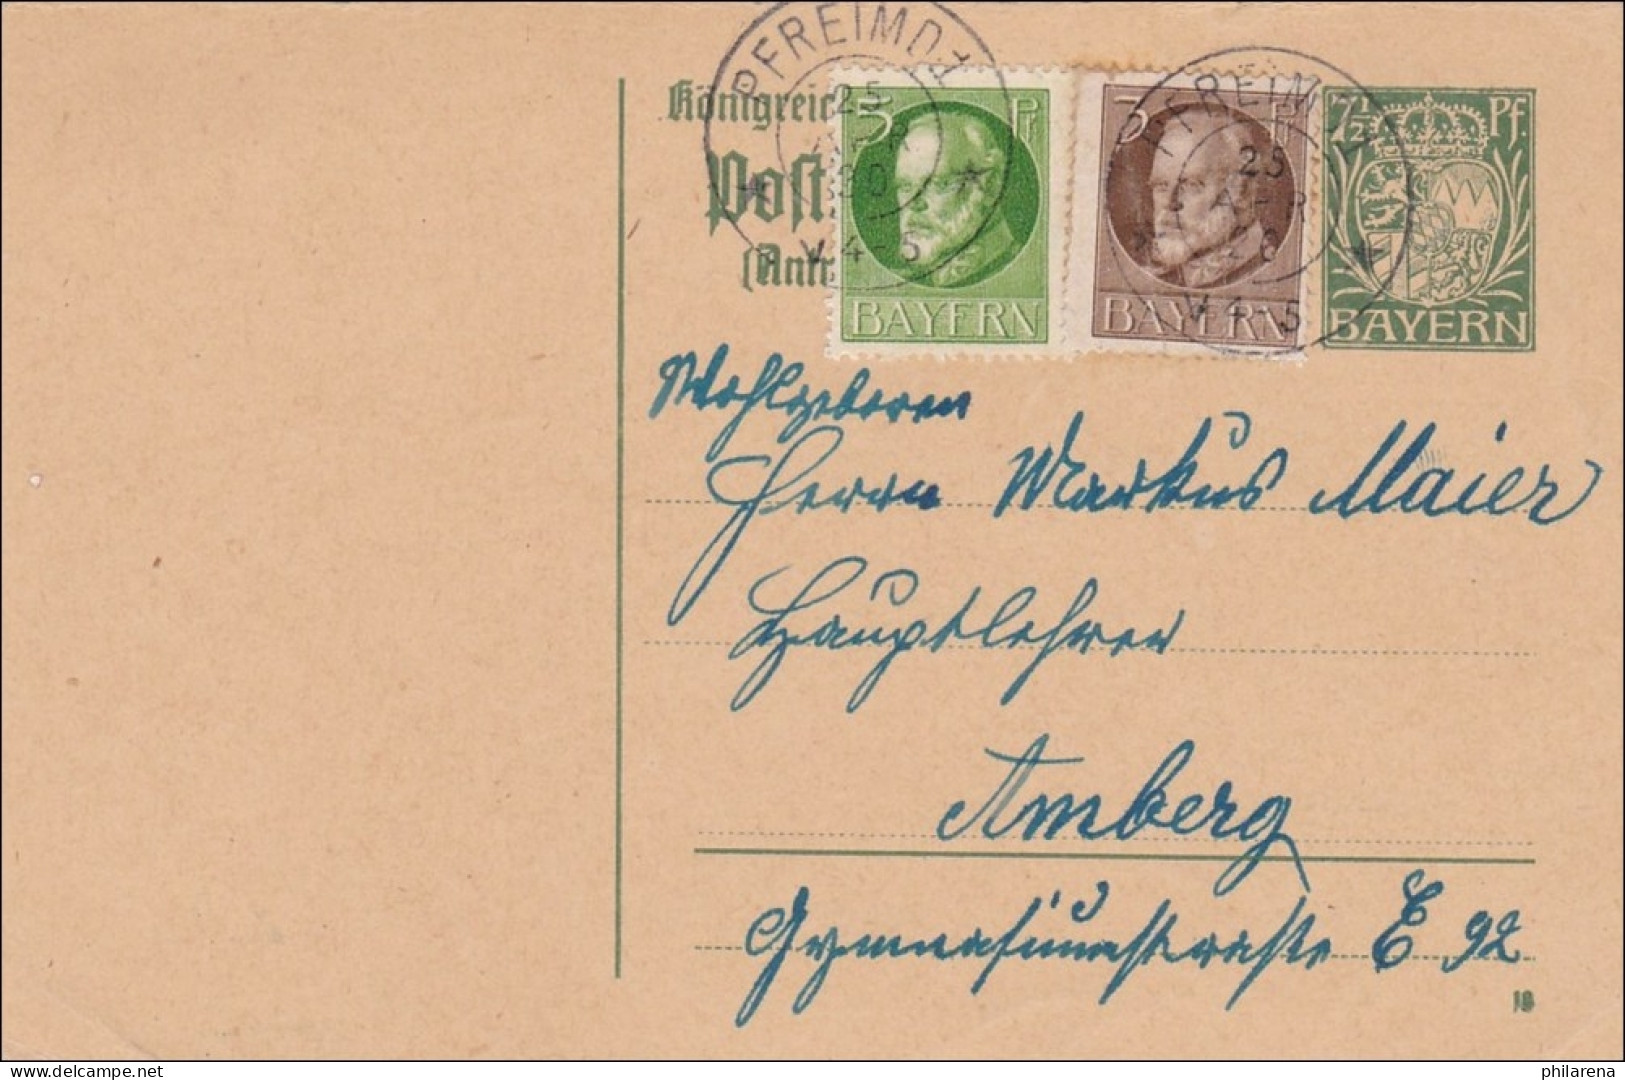 Bayern: 1920 Von Pfreimd Nach Amberg - Lettres & Documents